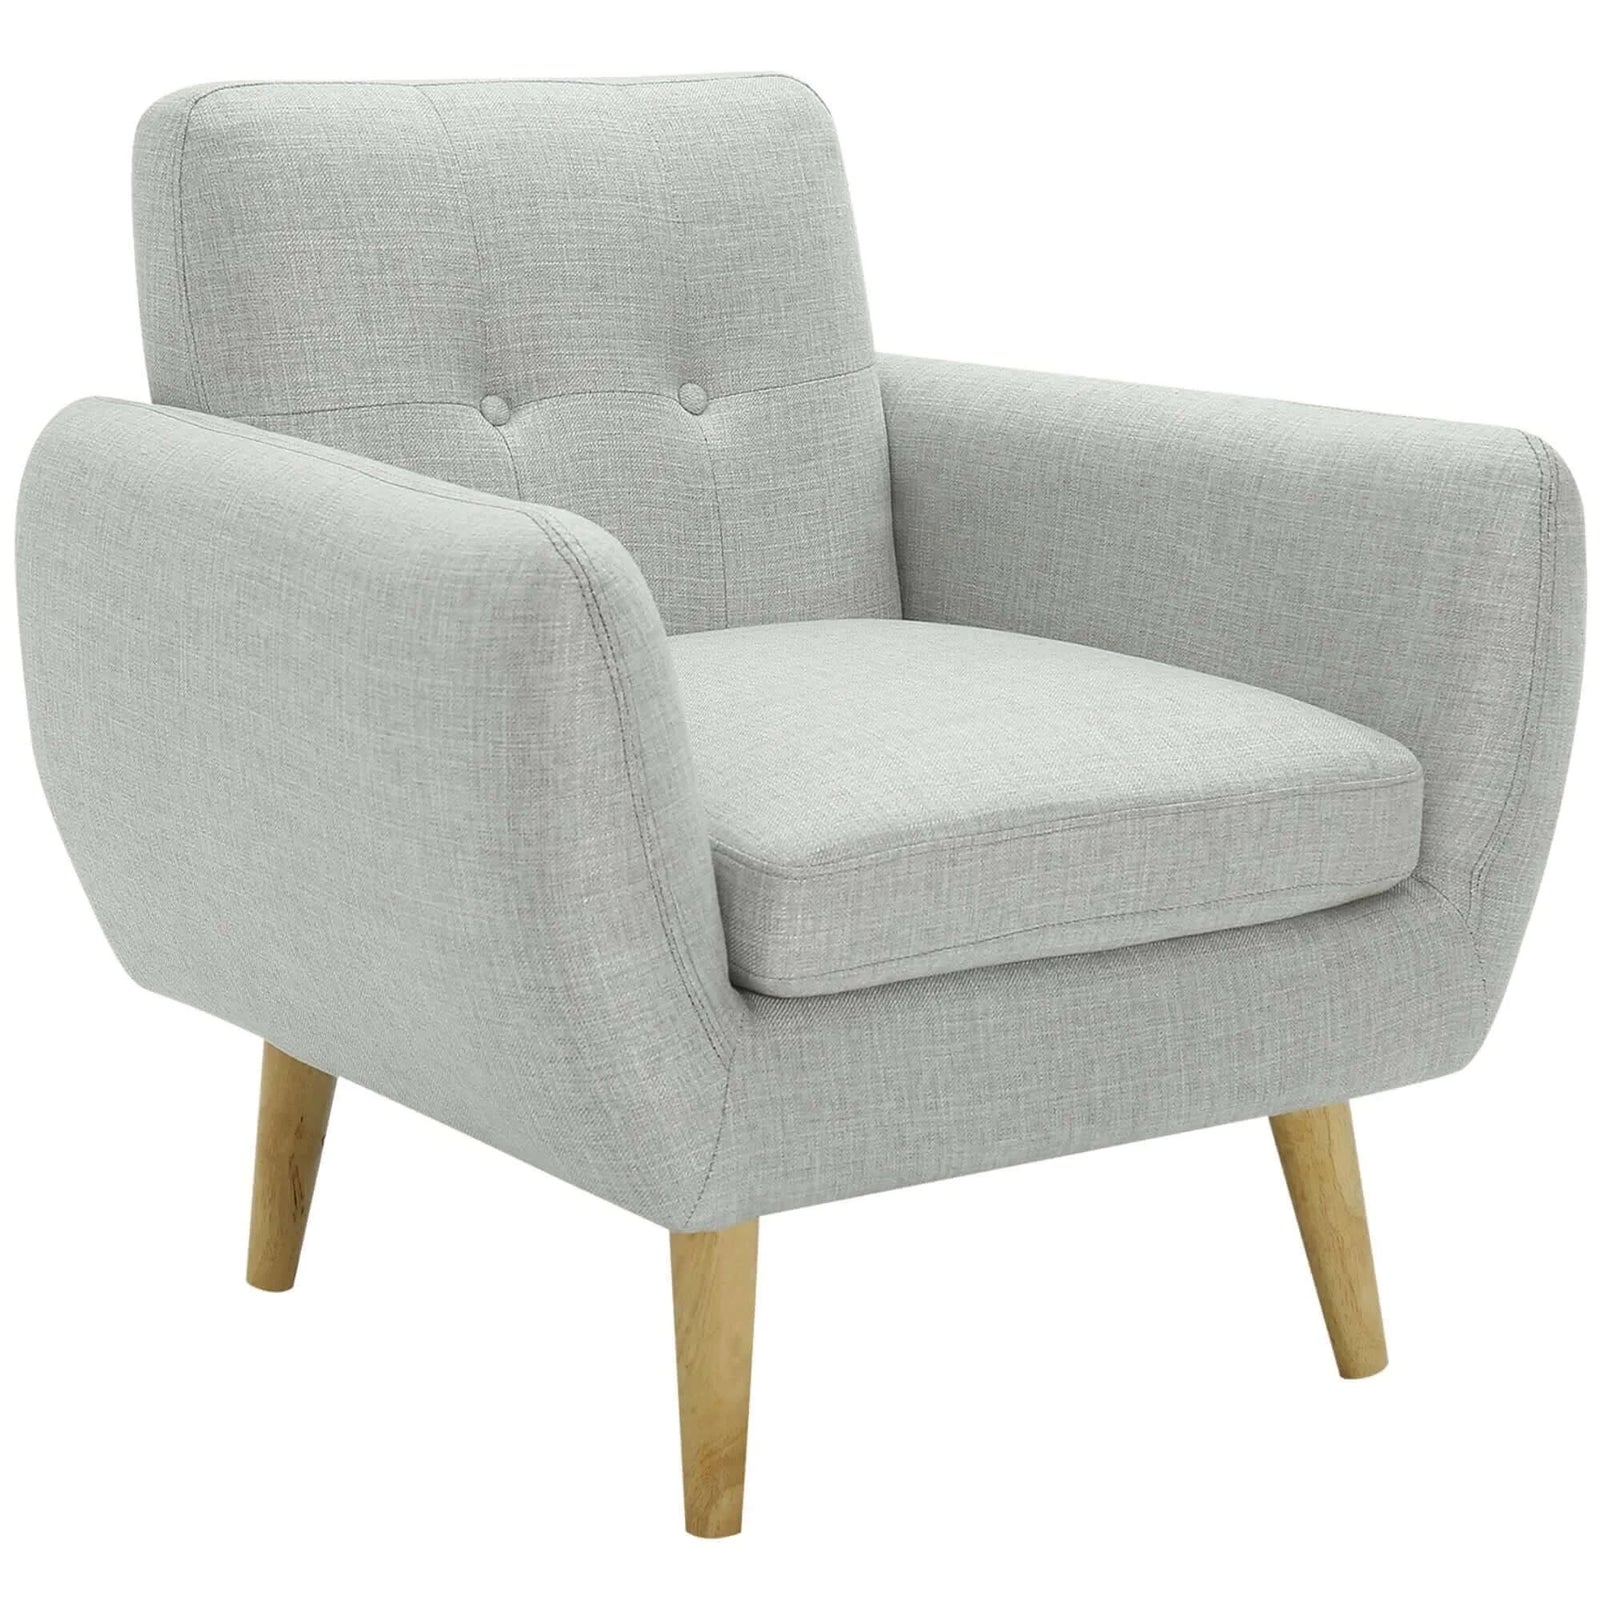 Buy Dane Single Seater Fabric Upholstered Sofa - Light Grey in Australia -Upinteriors